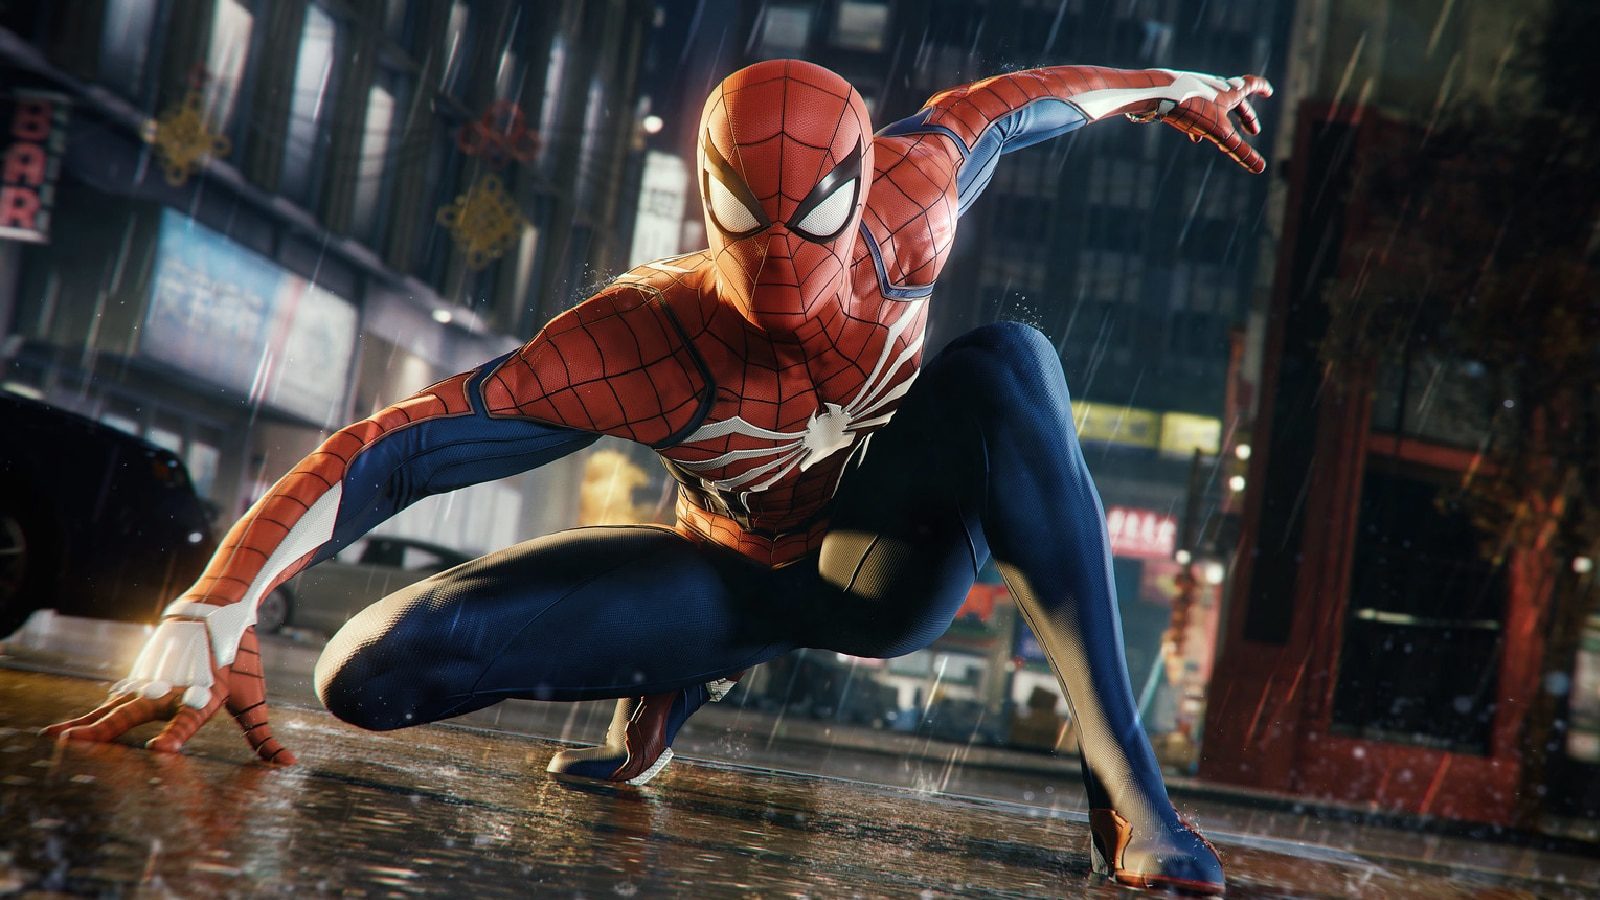 MarvelПК-версия Spiderman Remastered: характеристики, размер загрузки и системные требования